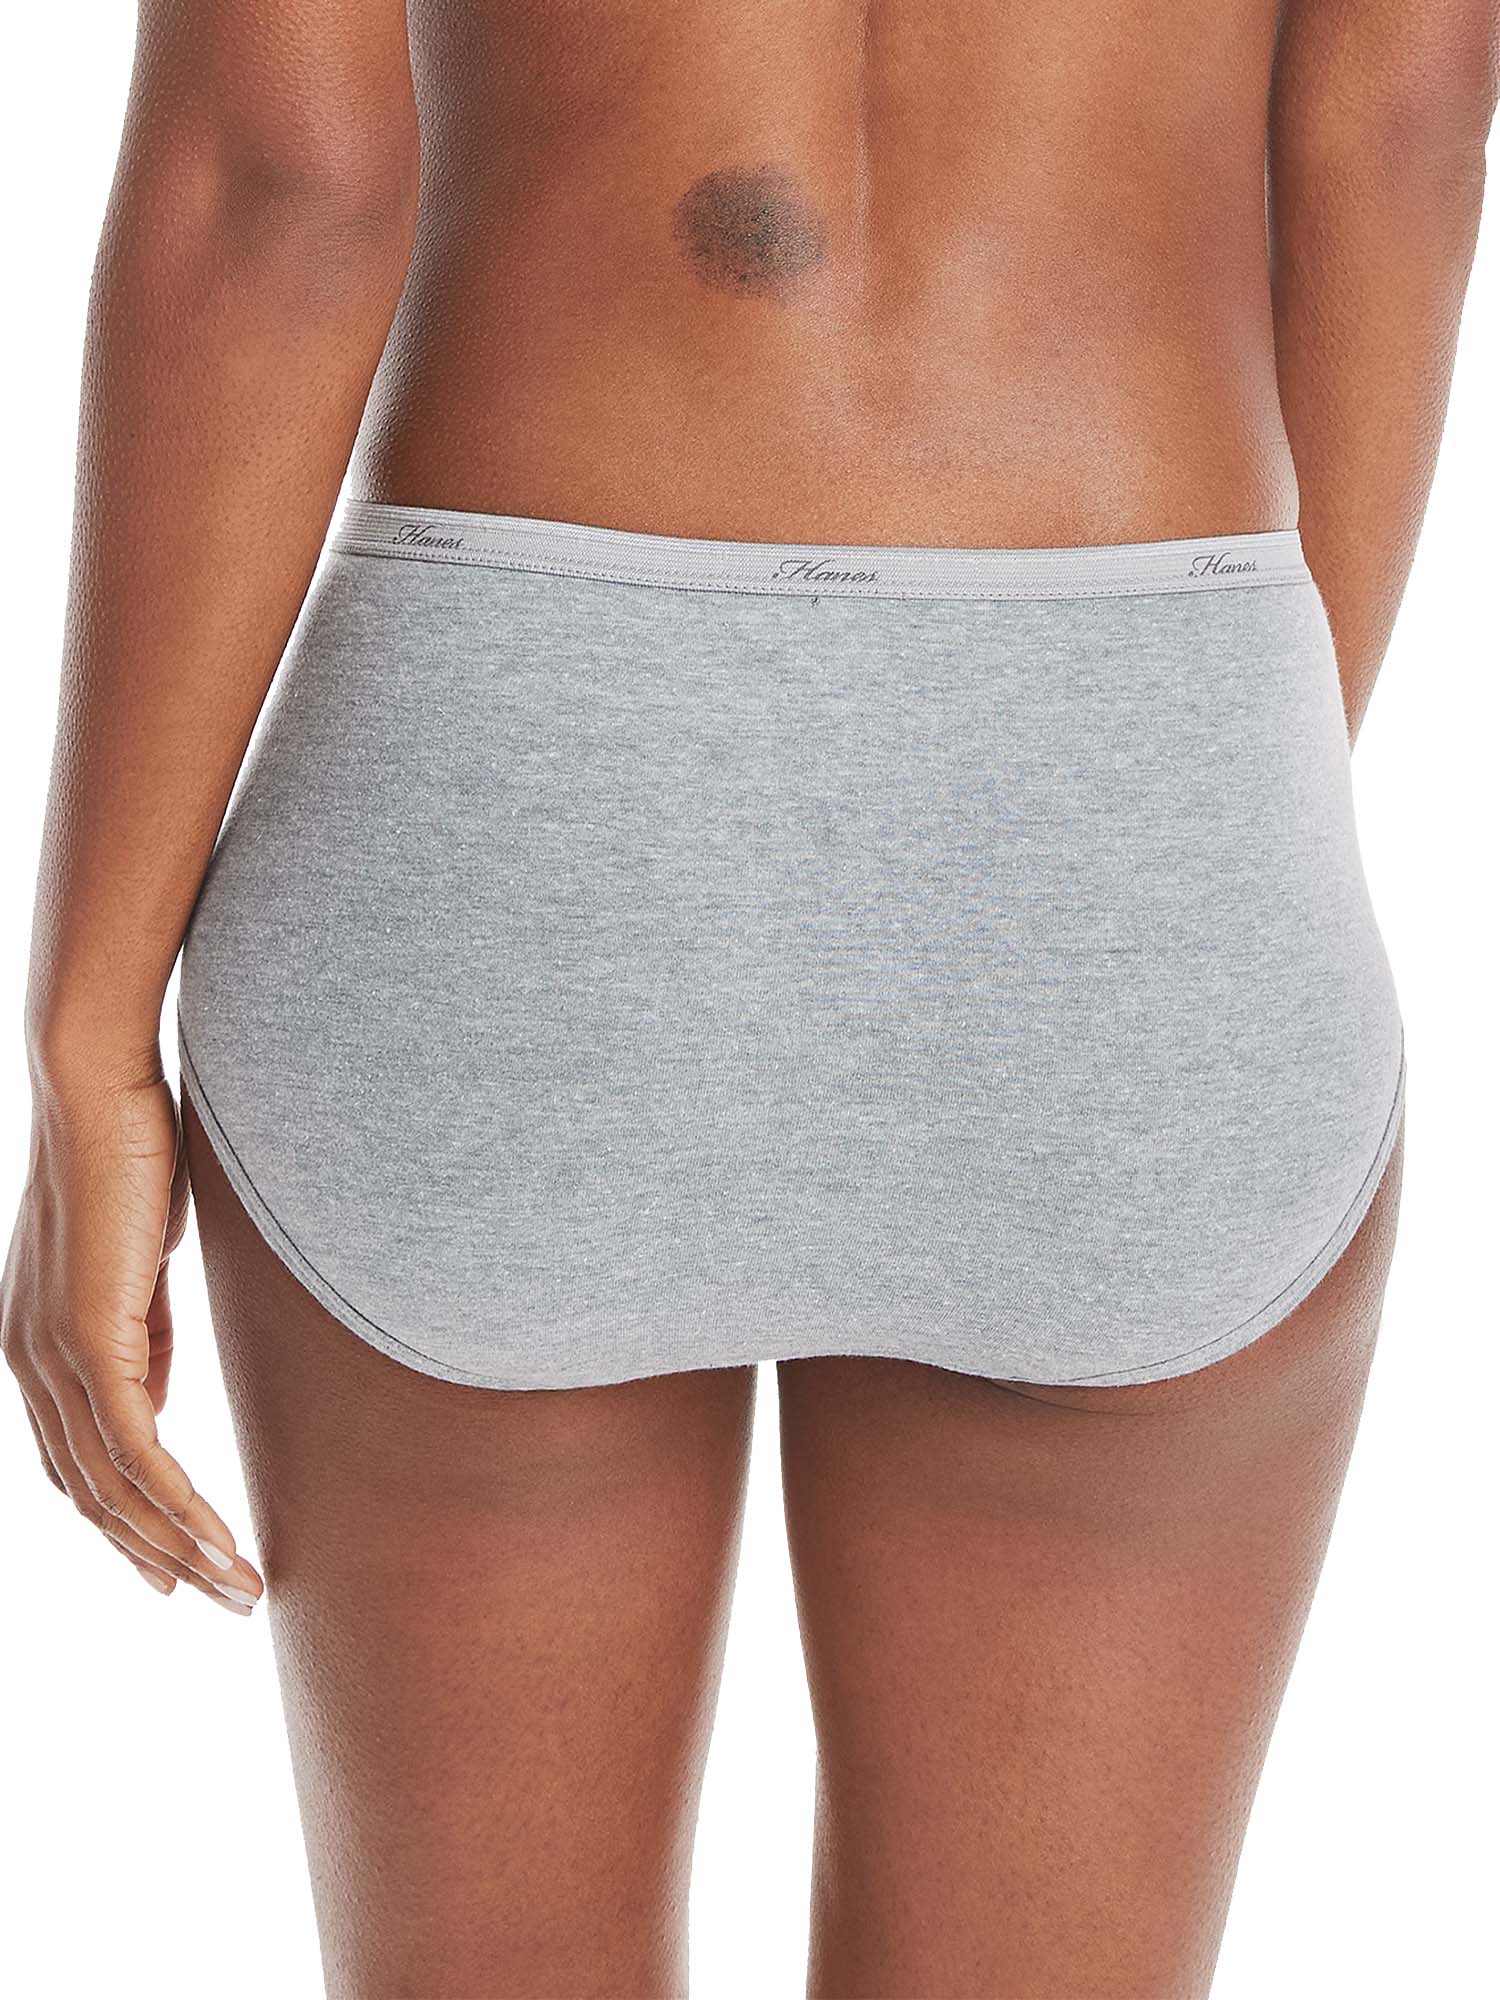 Hanes Women's Cool Comfort Cotton Brief Panties 6 Pack - image 4 of 8